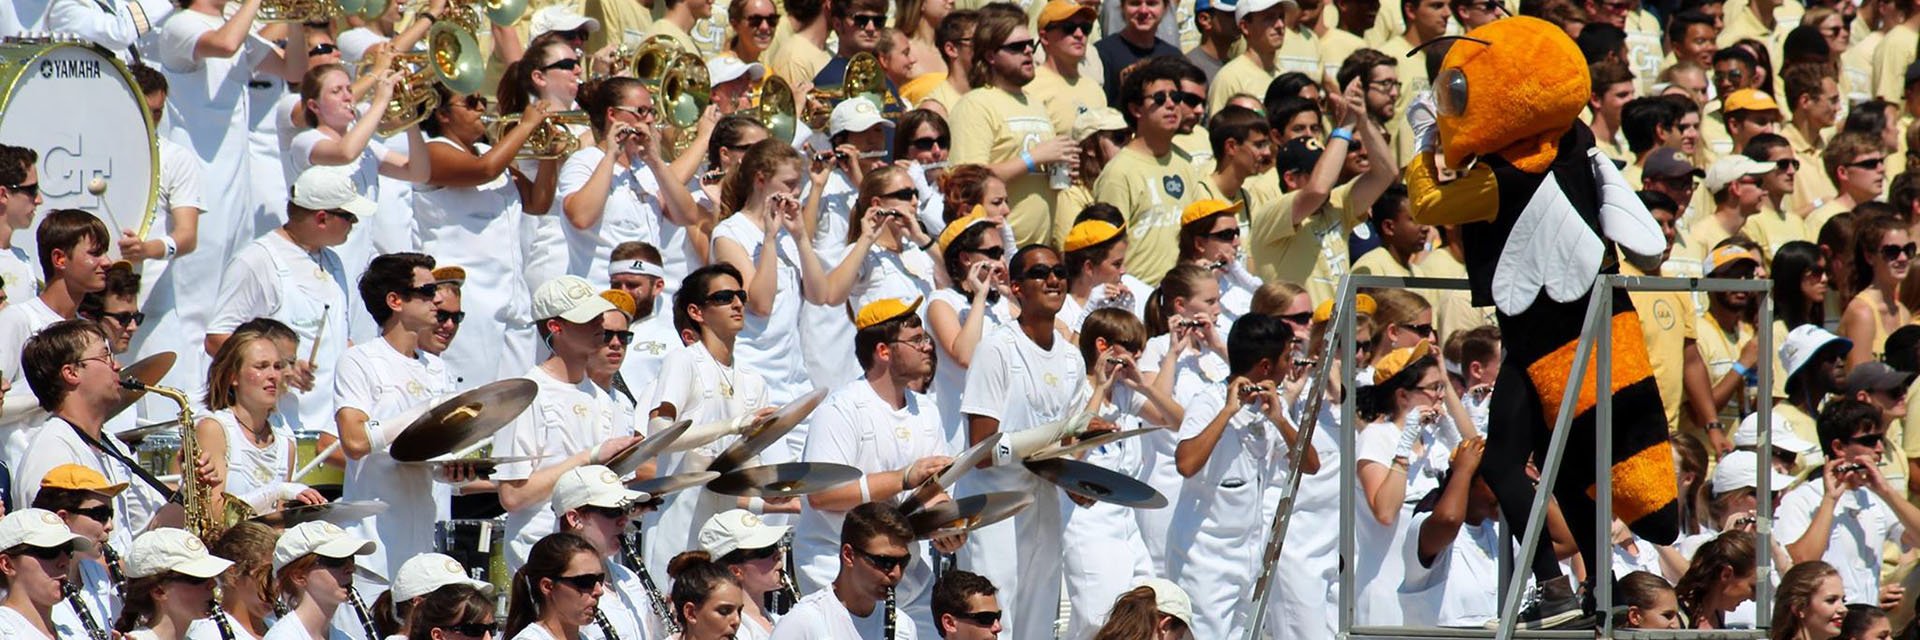 Buzz conducting marching band students at a football game.